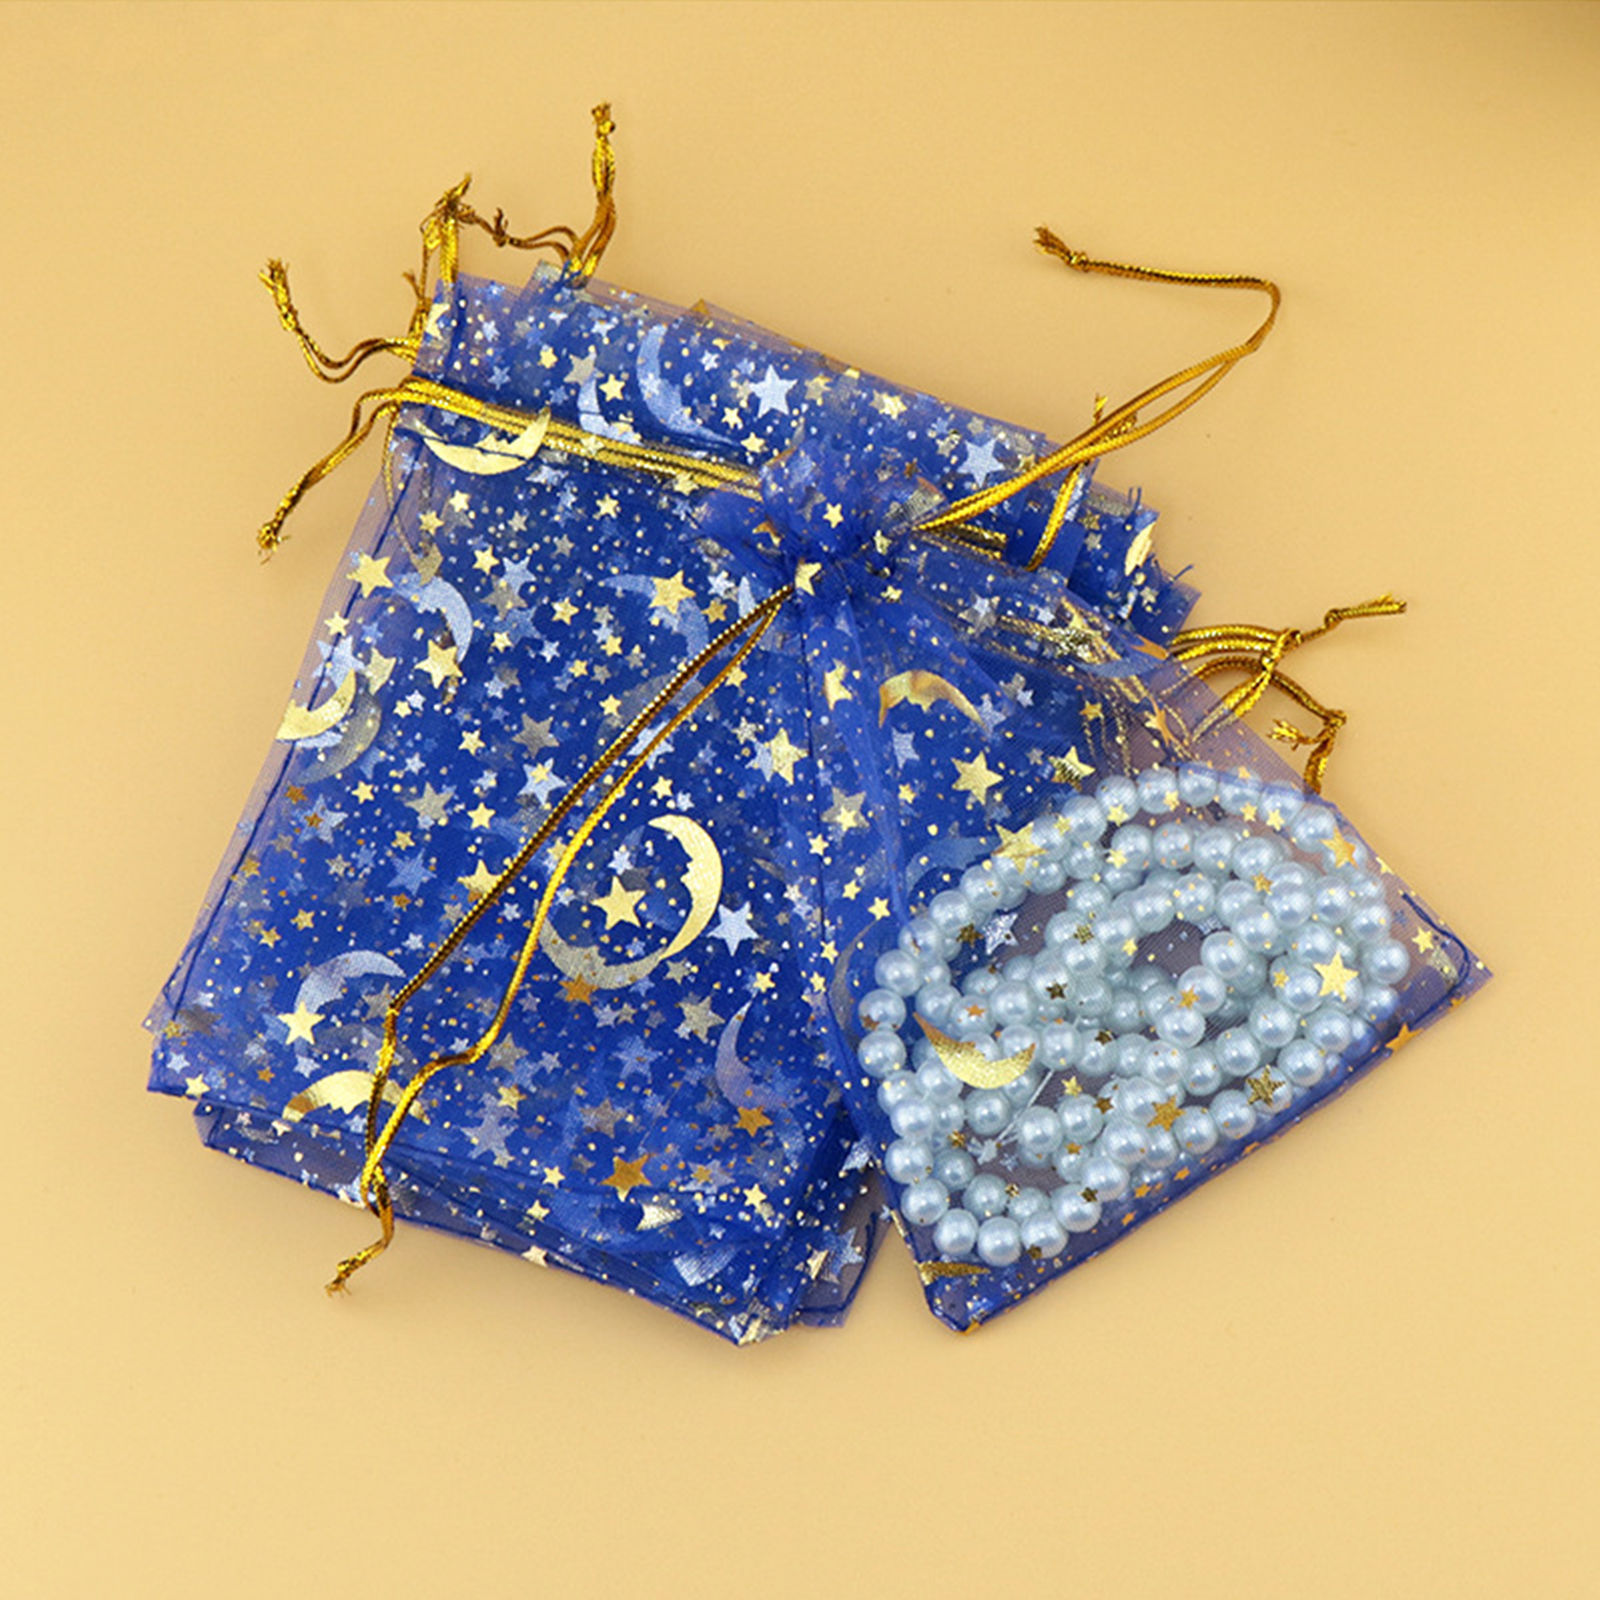 Picture of Wedding Gift Organza Galaxy Drawstring Bags Half Moon Royal Blue Star 12cm x9cm(4 6/8" x3 4/8"), 20 PCs